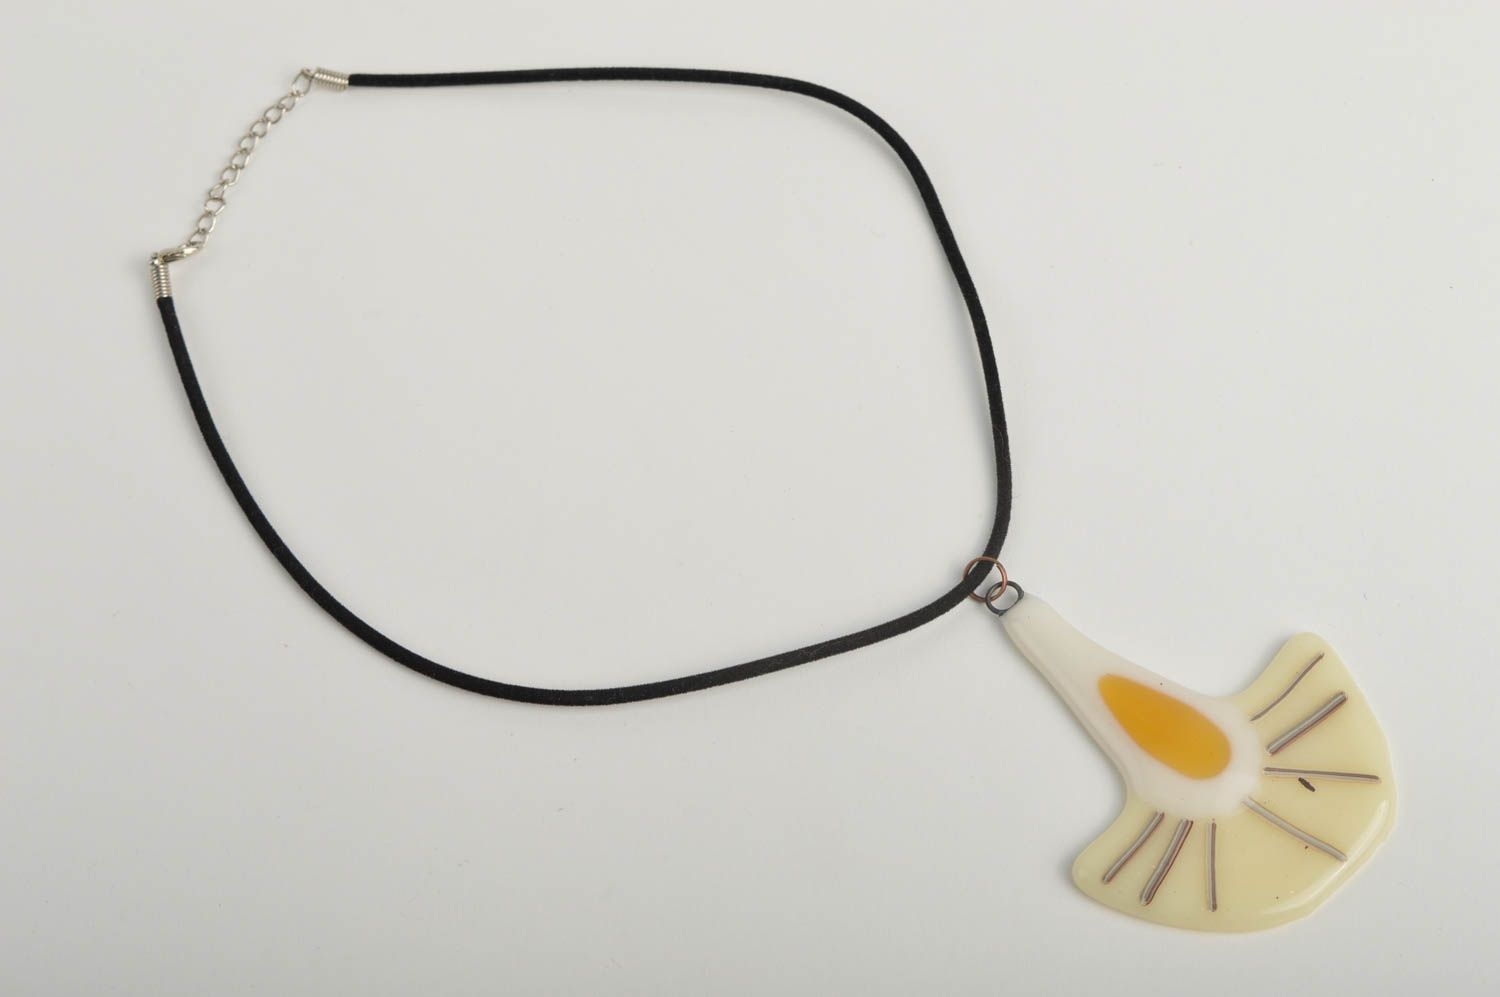 Stylish handmade neck pendant glass pendant designer jewelry gifts for her photo 3